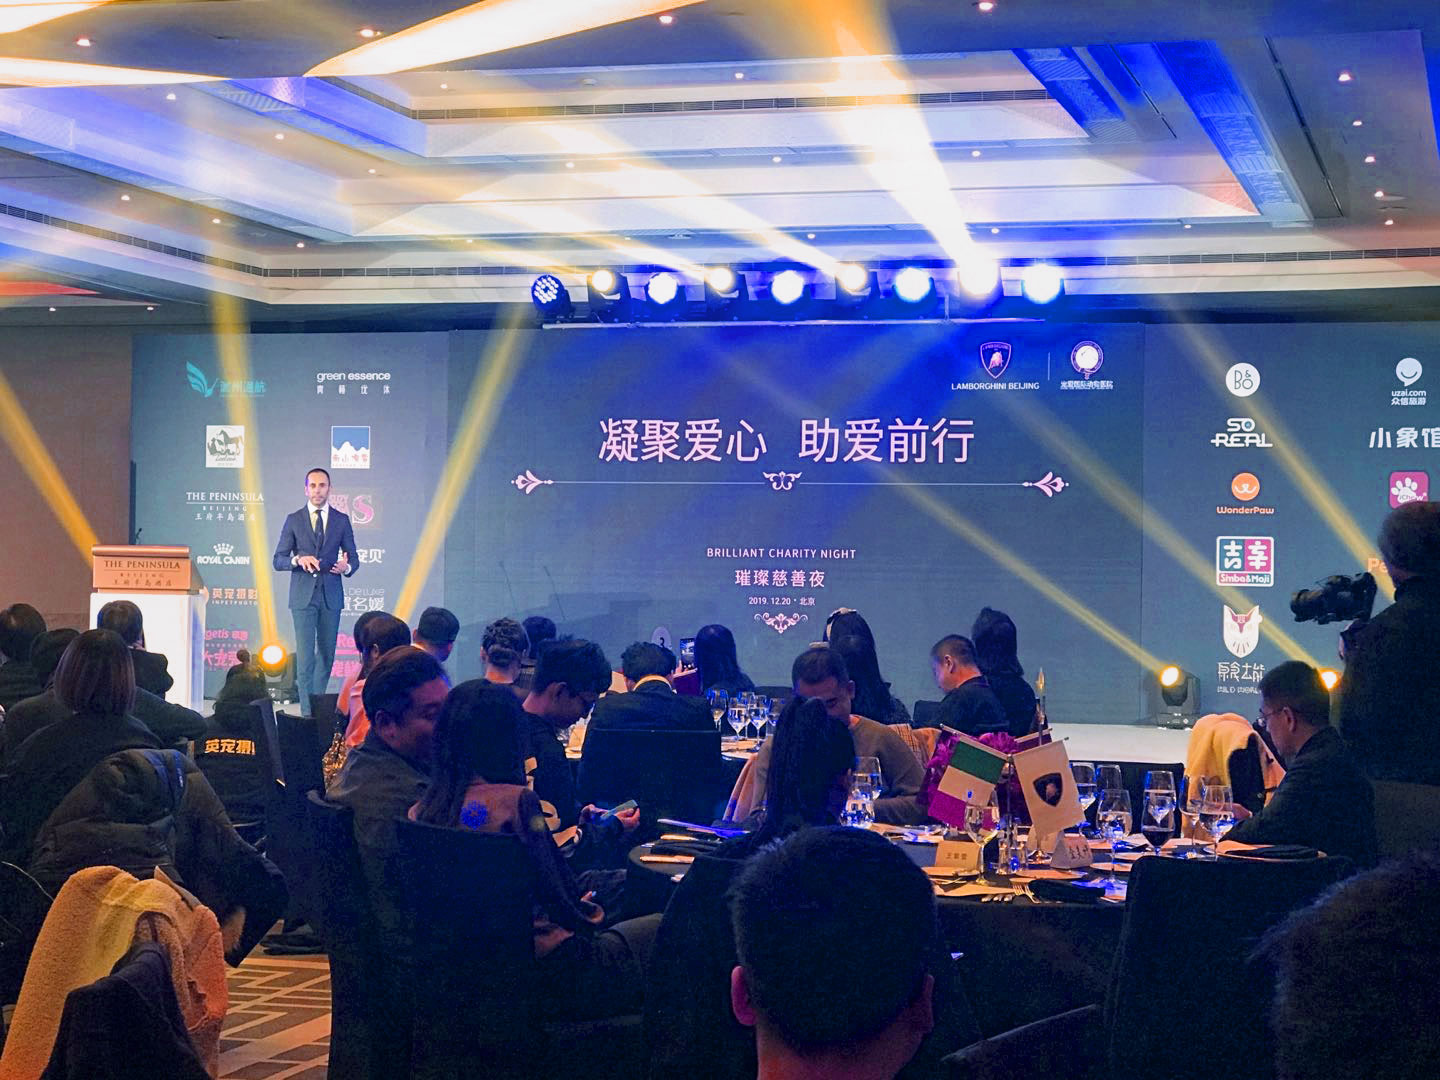 Partnerships with Lamborghini Beijing and ChongAi international veterinary company for 2019 annual “Brilliant Charity Night” gala.